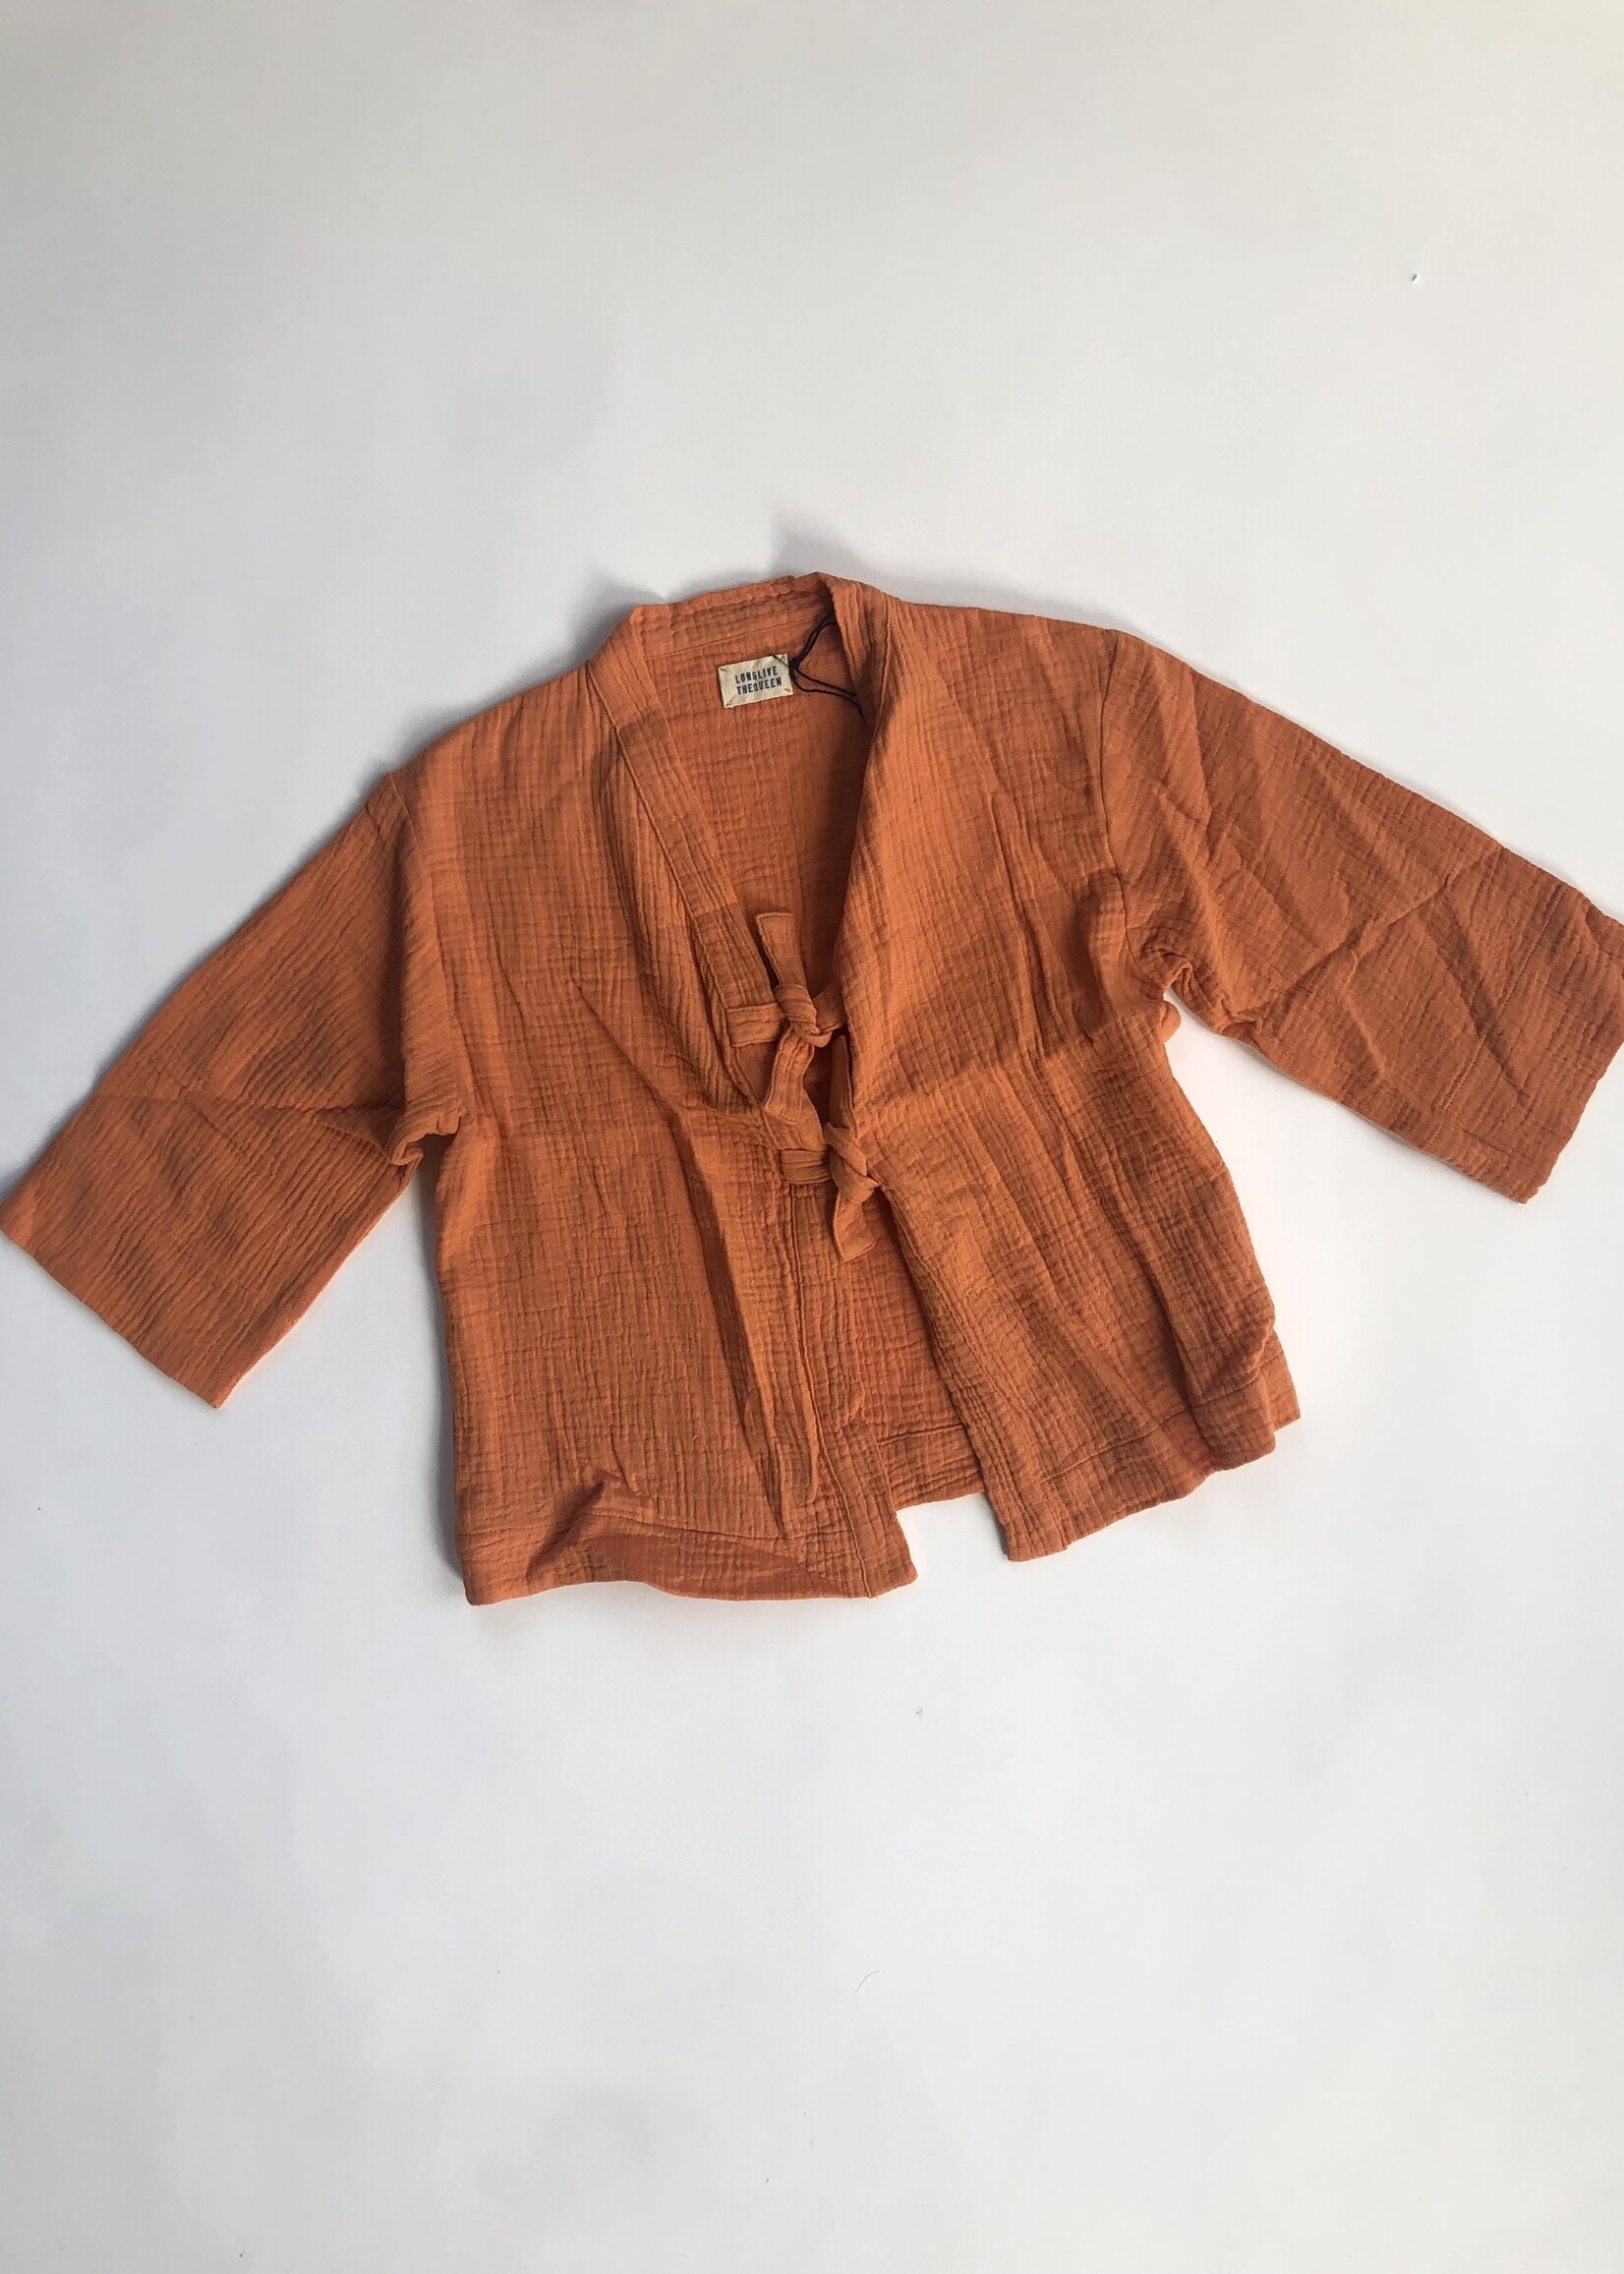 Long Live The Queen Orange Kimono Blouse/jacket  8-10y